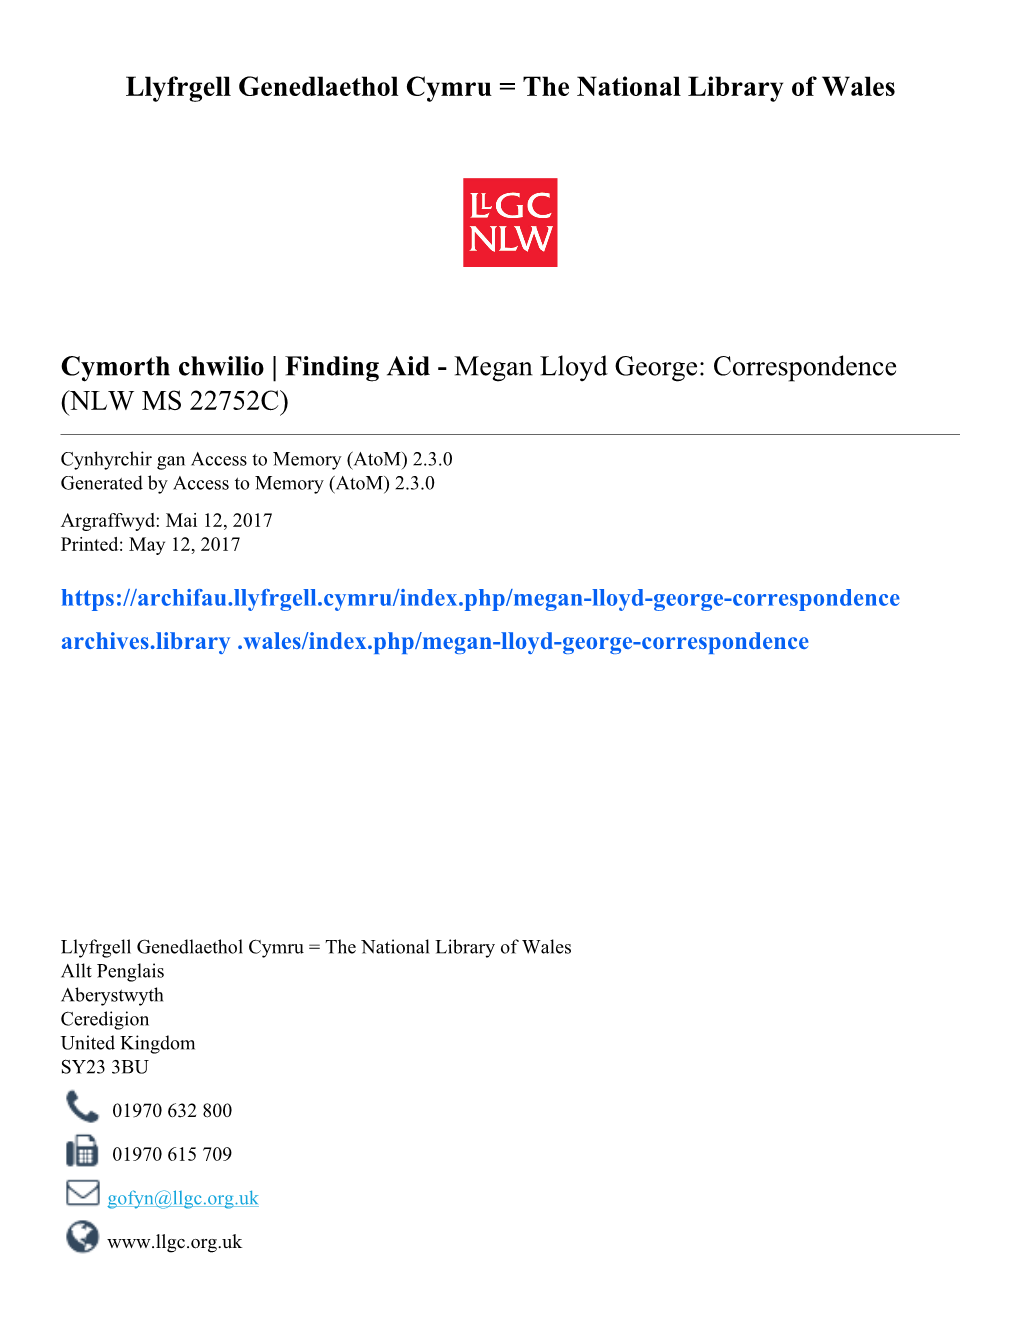 Megan Lloyd George: Correspondence (NLW MS 22752C)